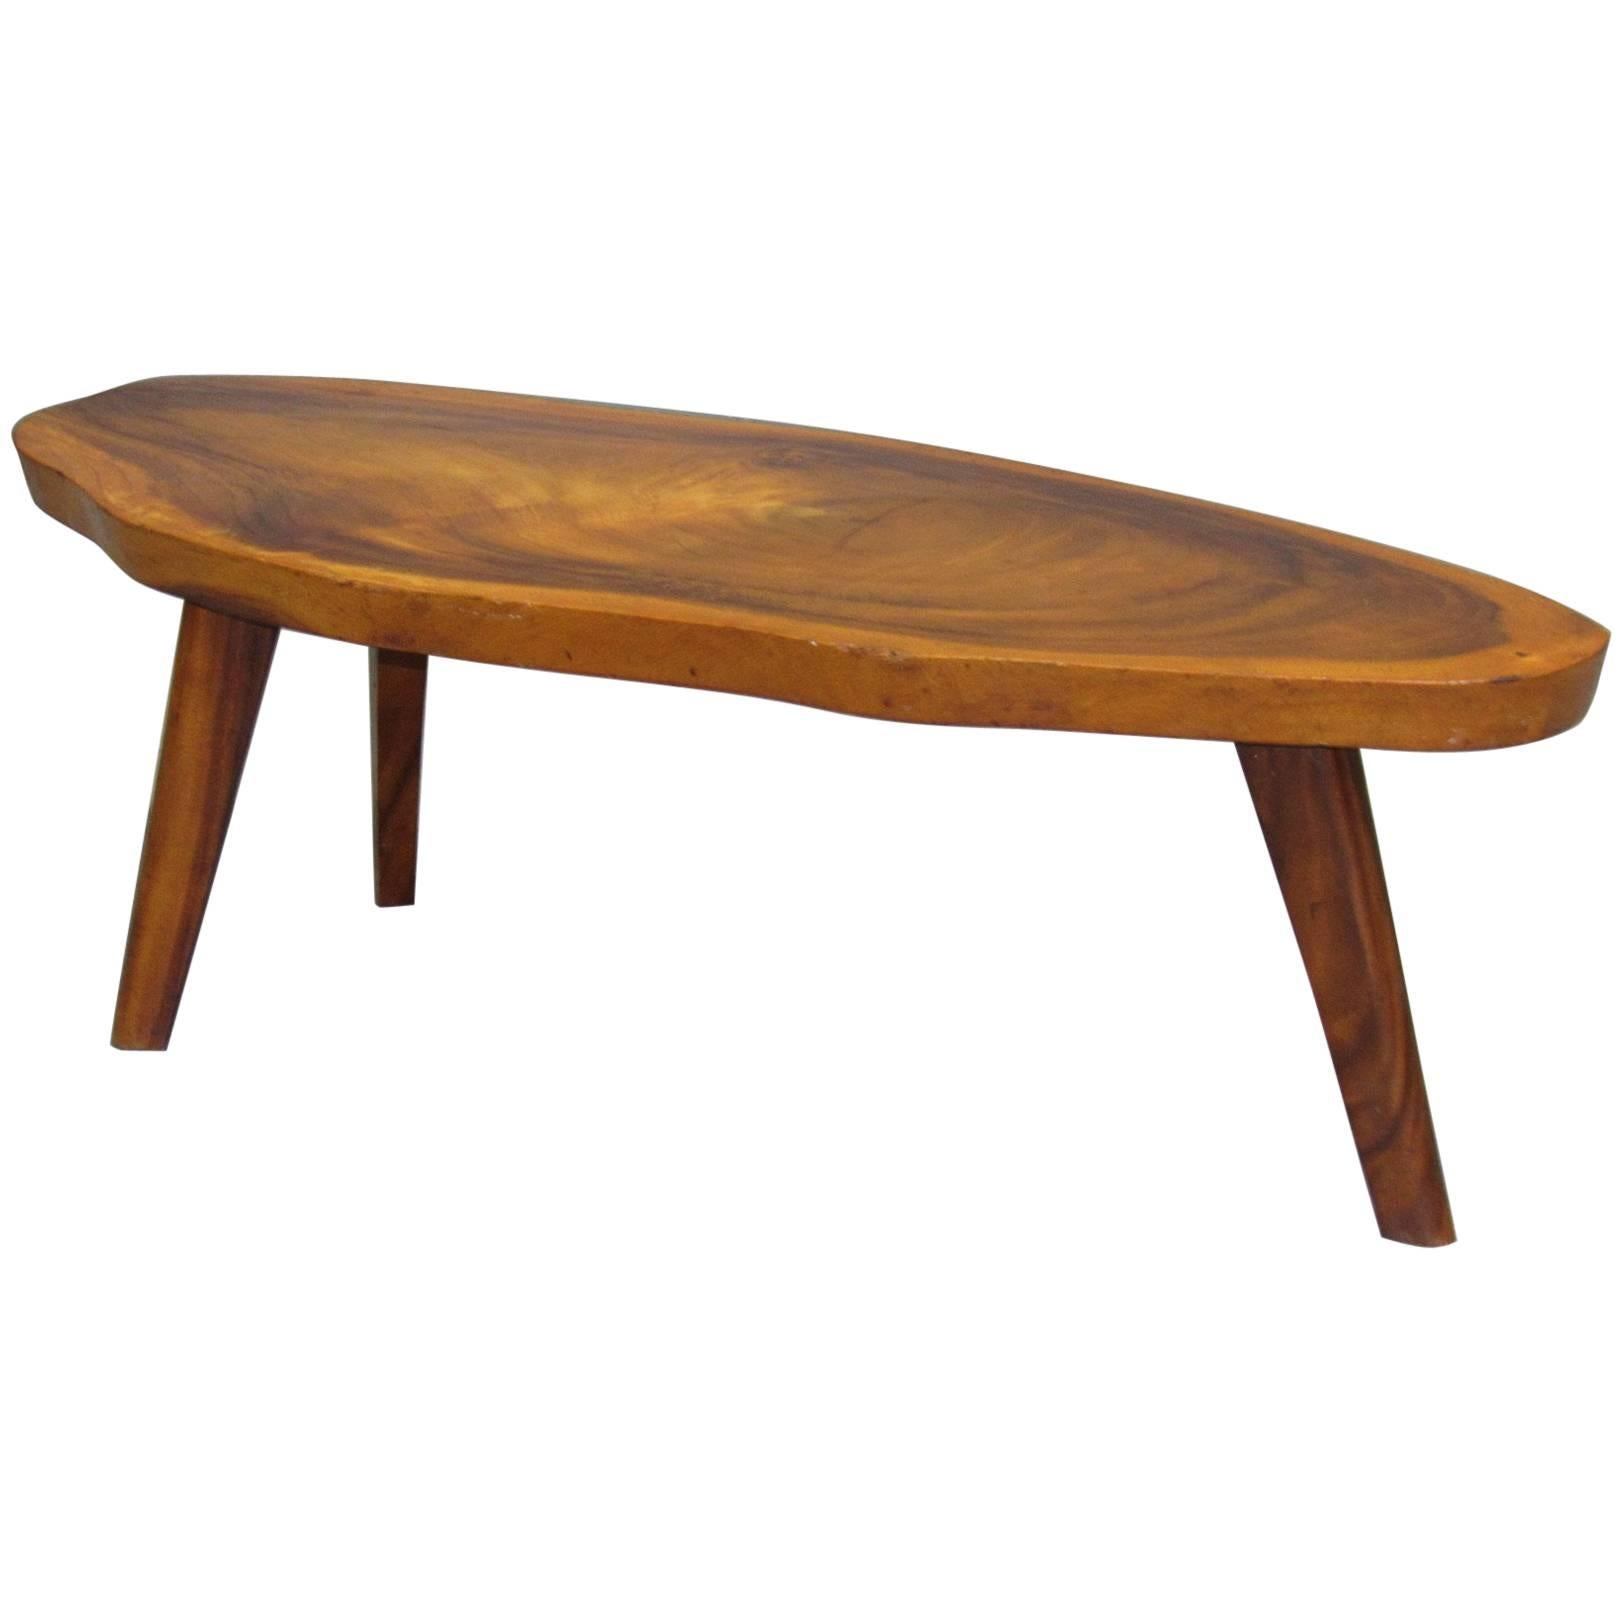 Solid Koa Wood Free-Form Live Edge Coffee Table, 1960s